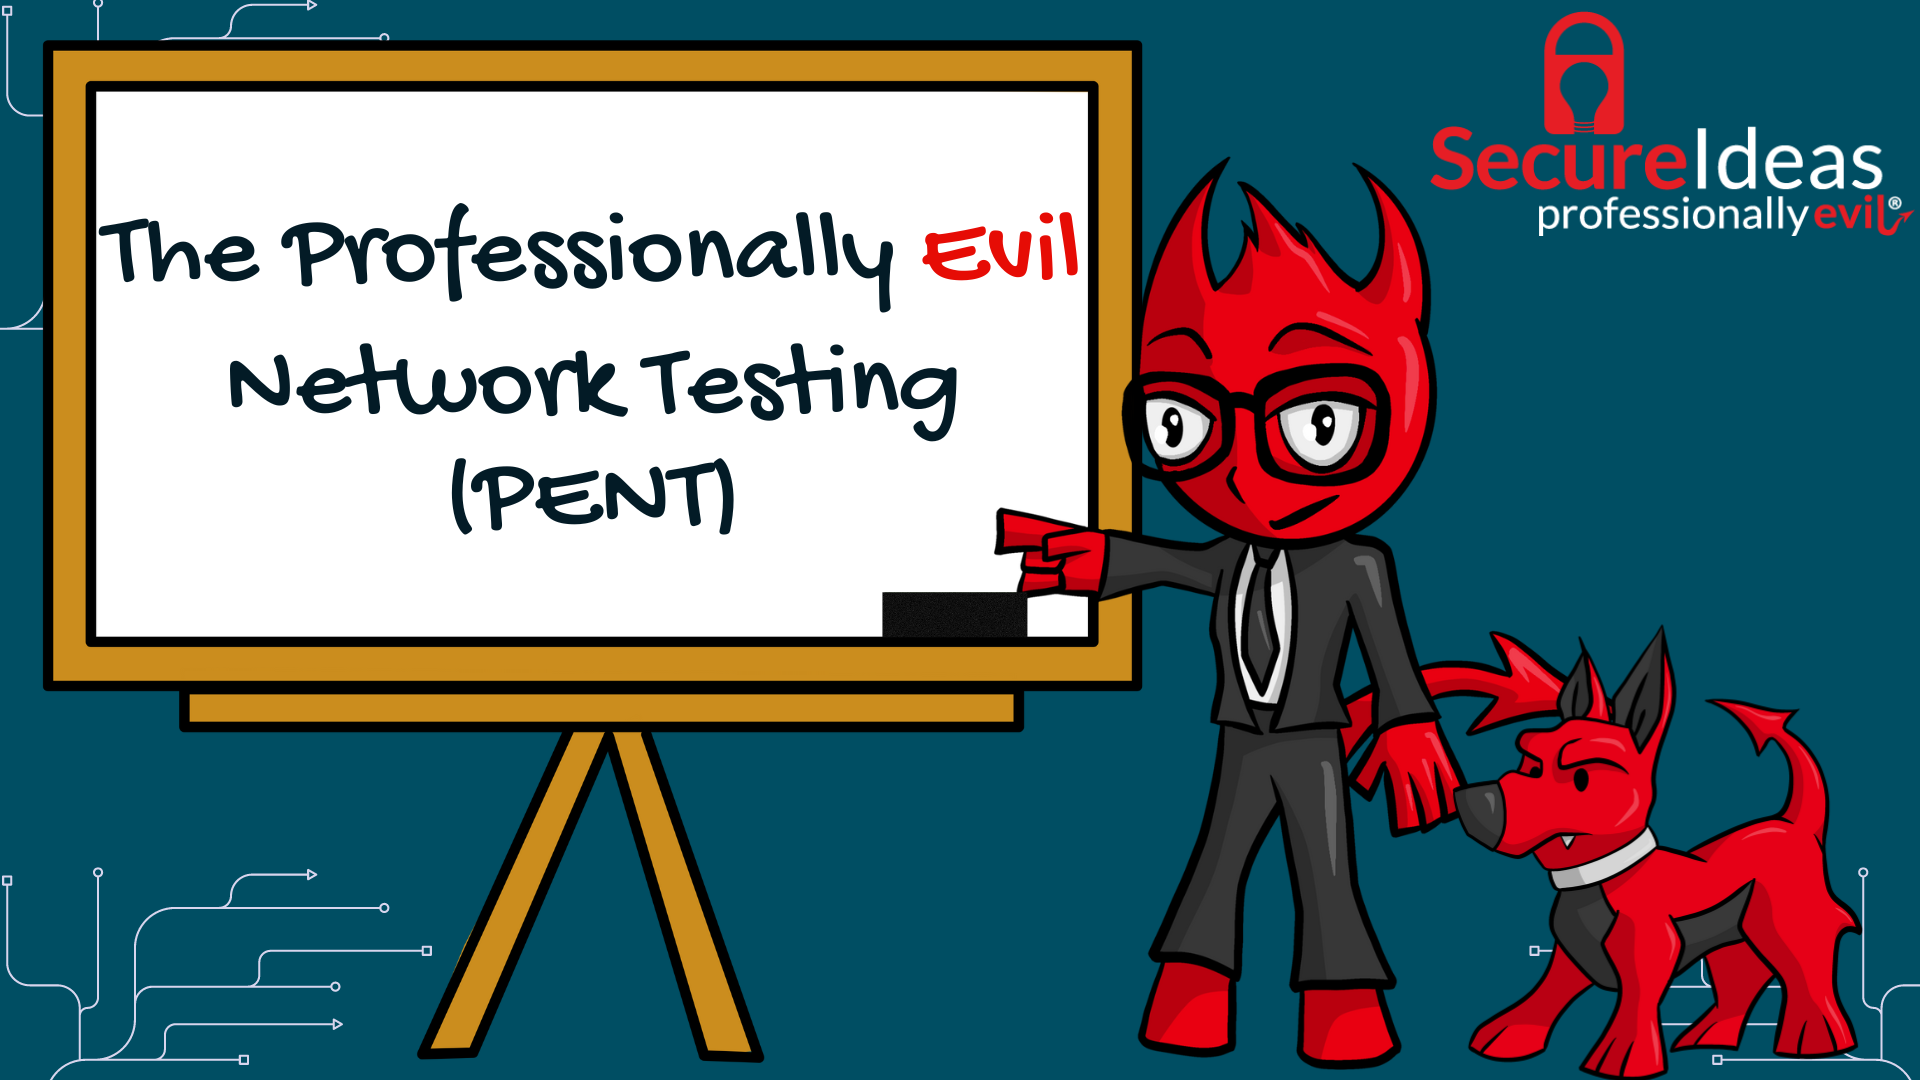 Professionally Evil Network Testing (PENT)